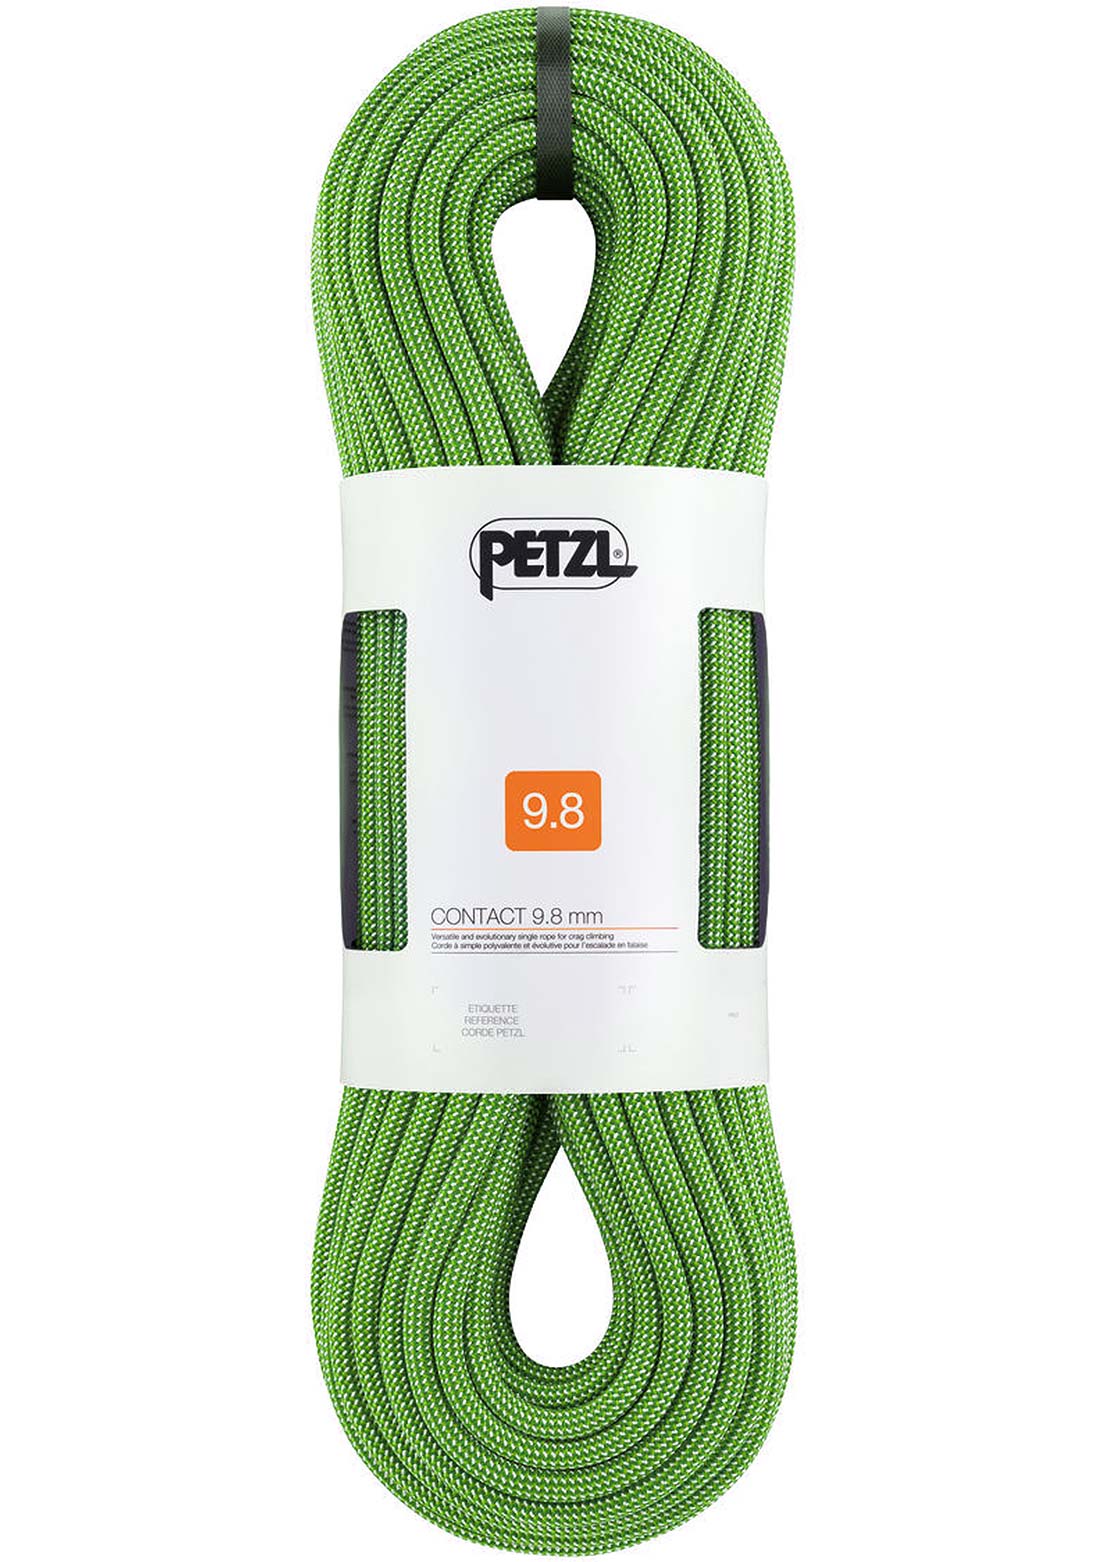 Petzl Contact 9.8mm Climbing Rope - 70m Green